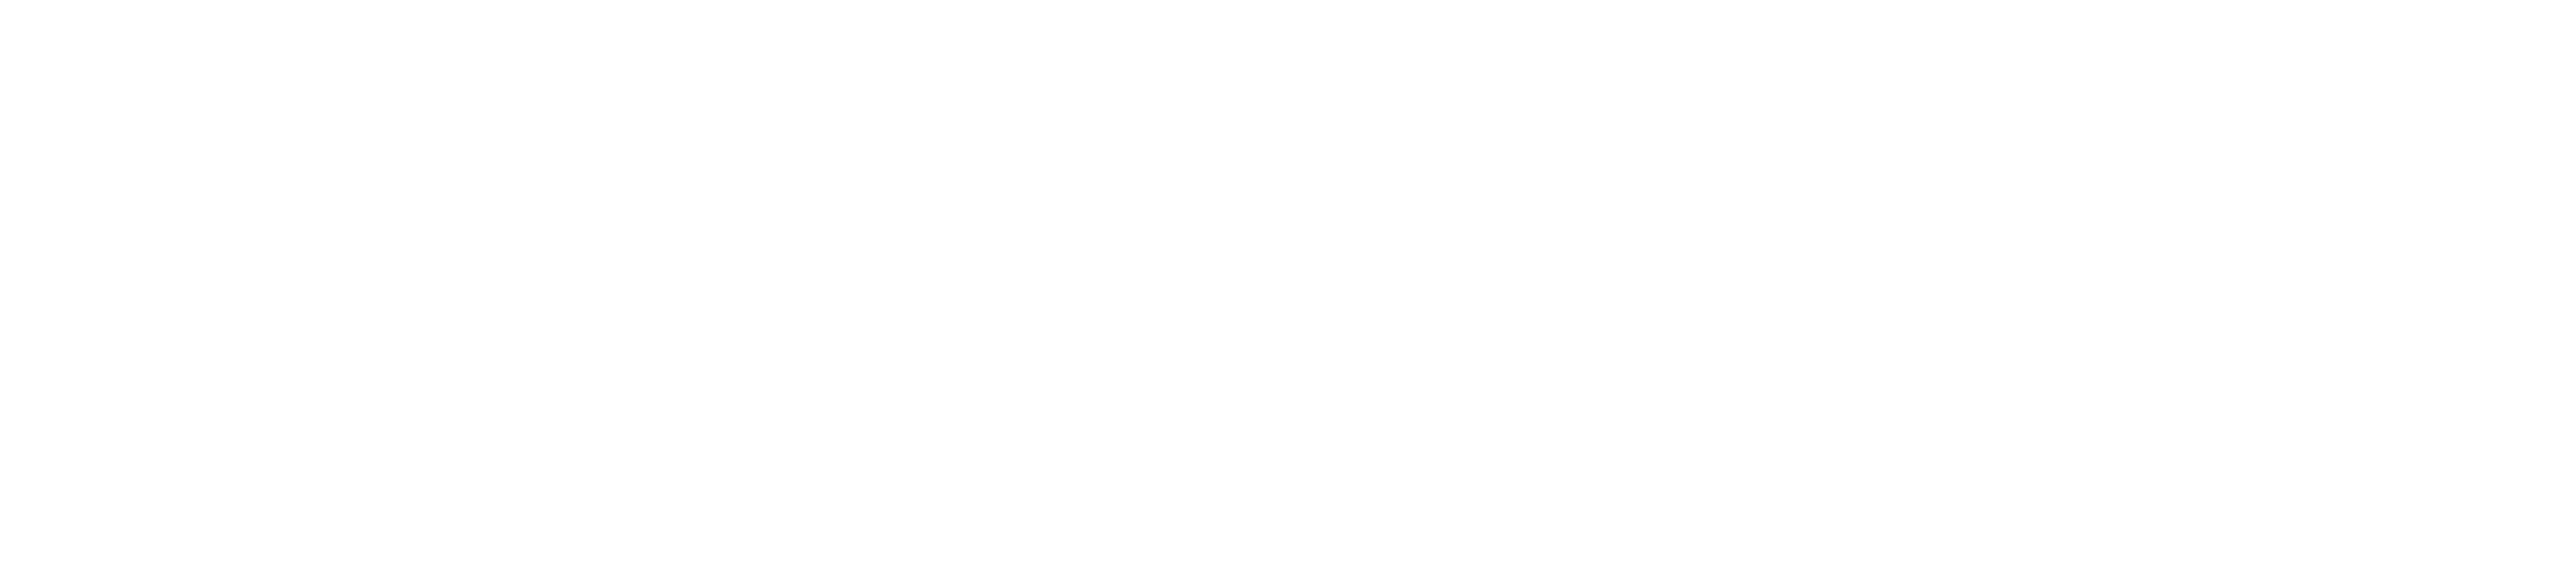 Immersive Logo